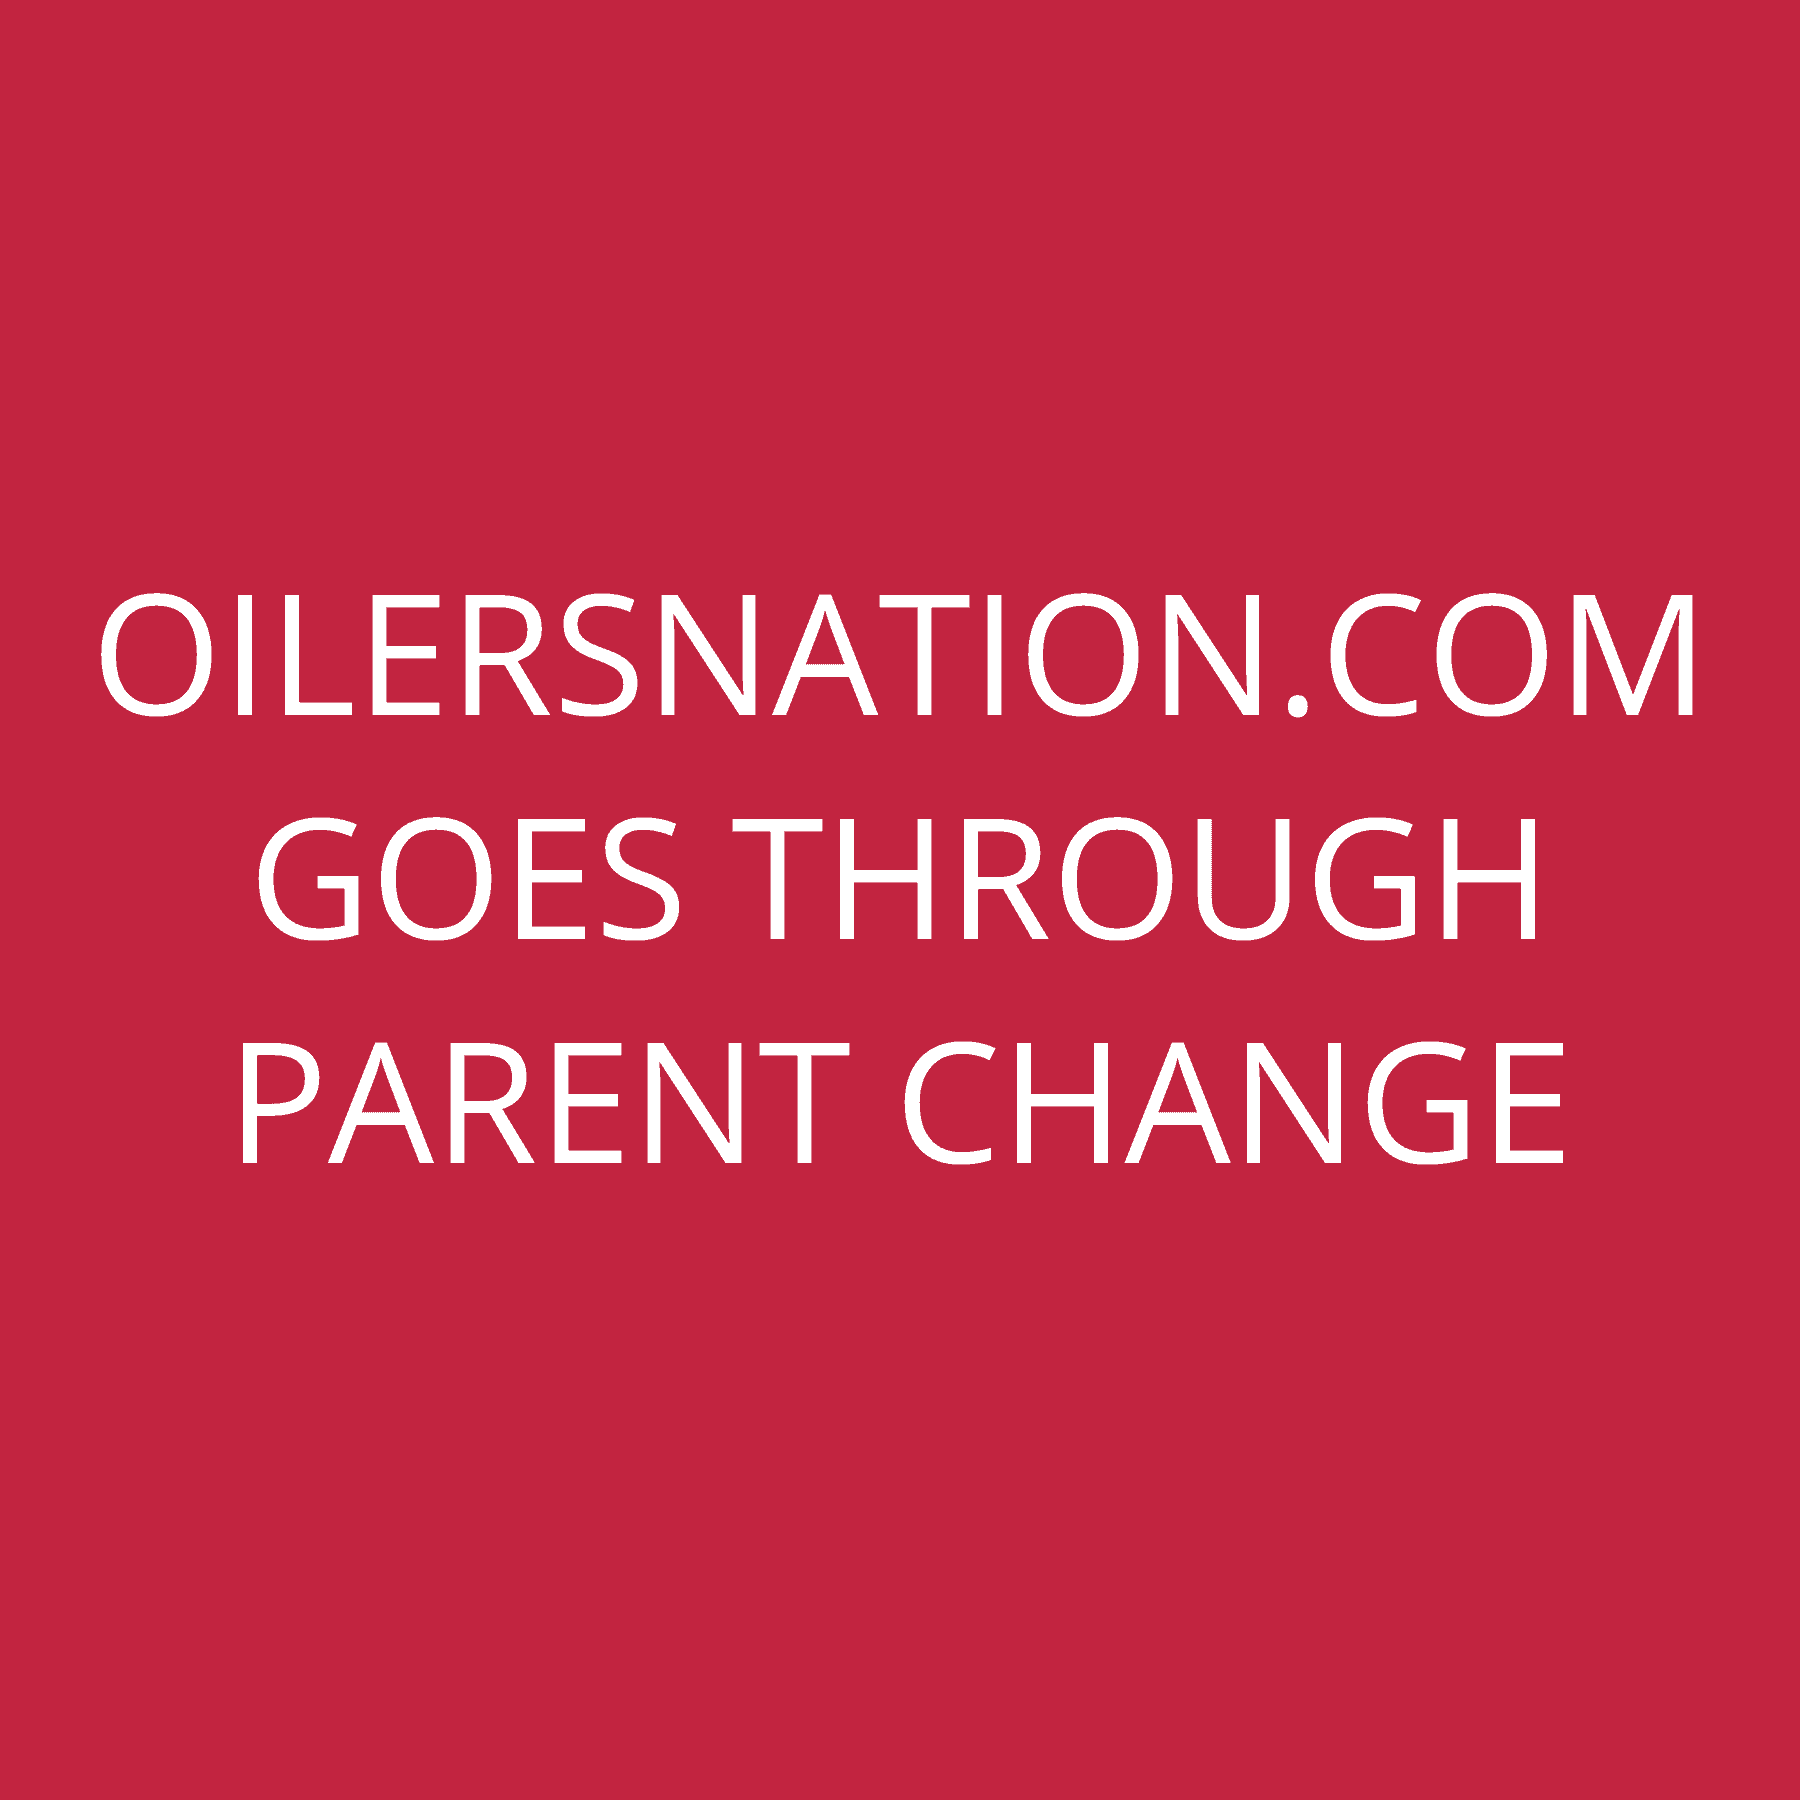 OilersNation.com goes through parent change